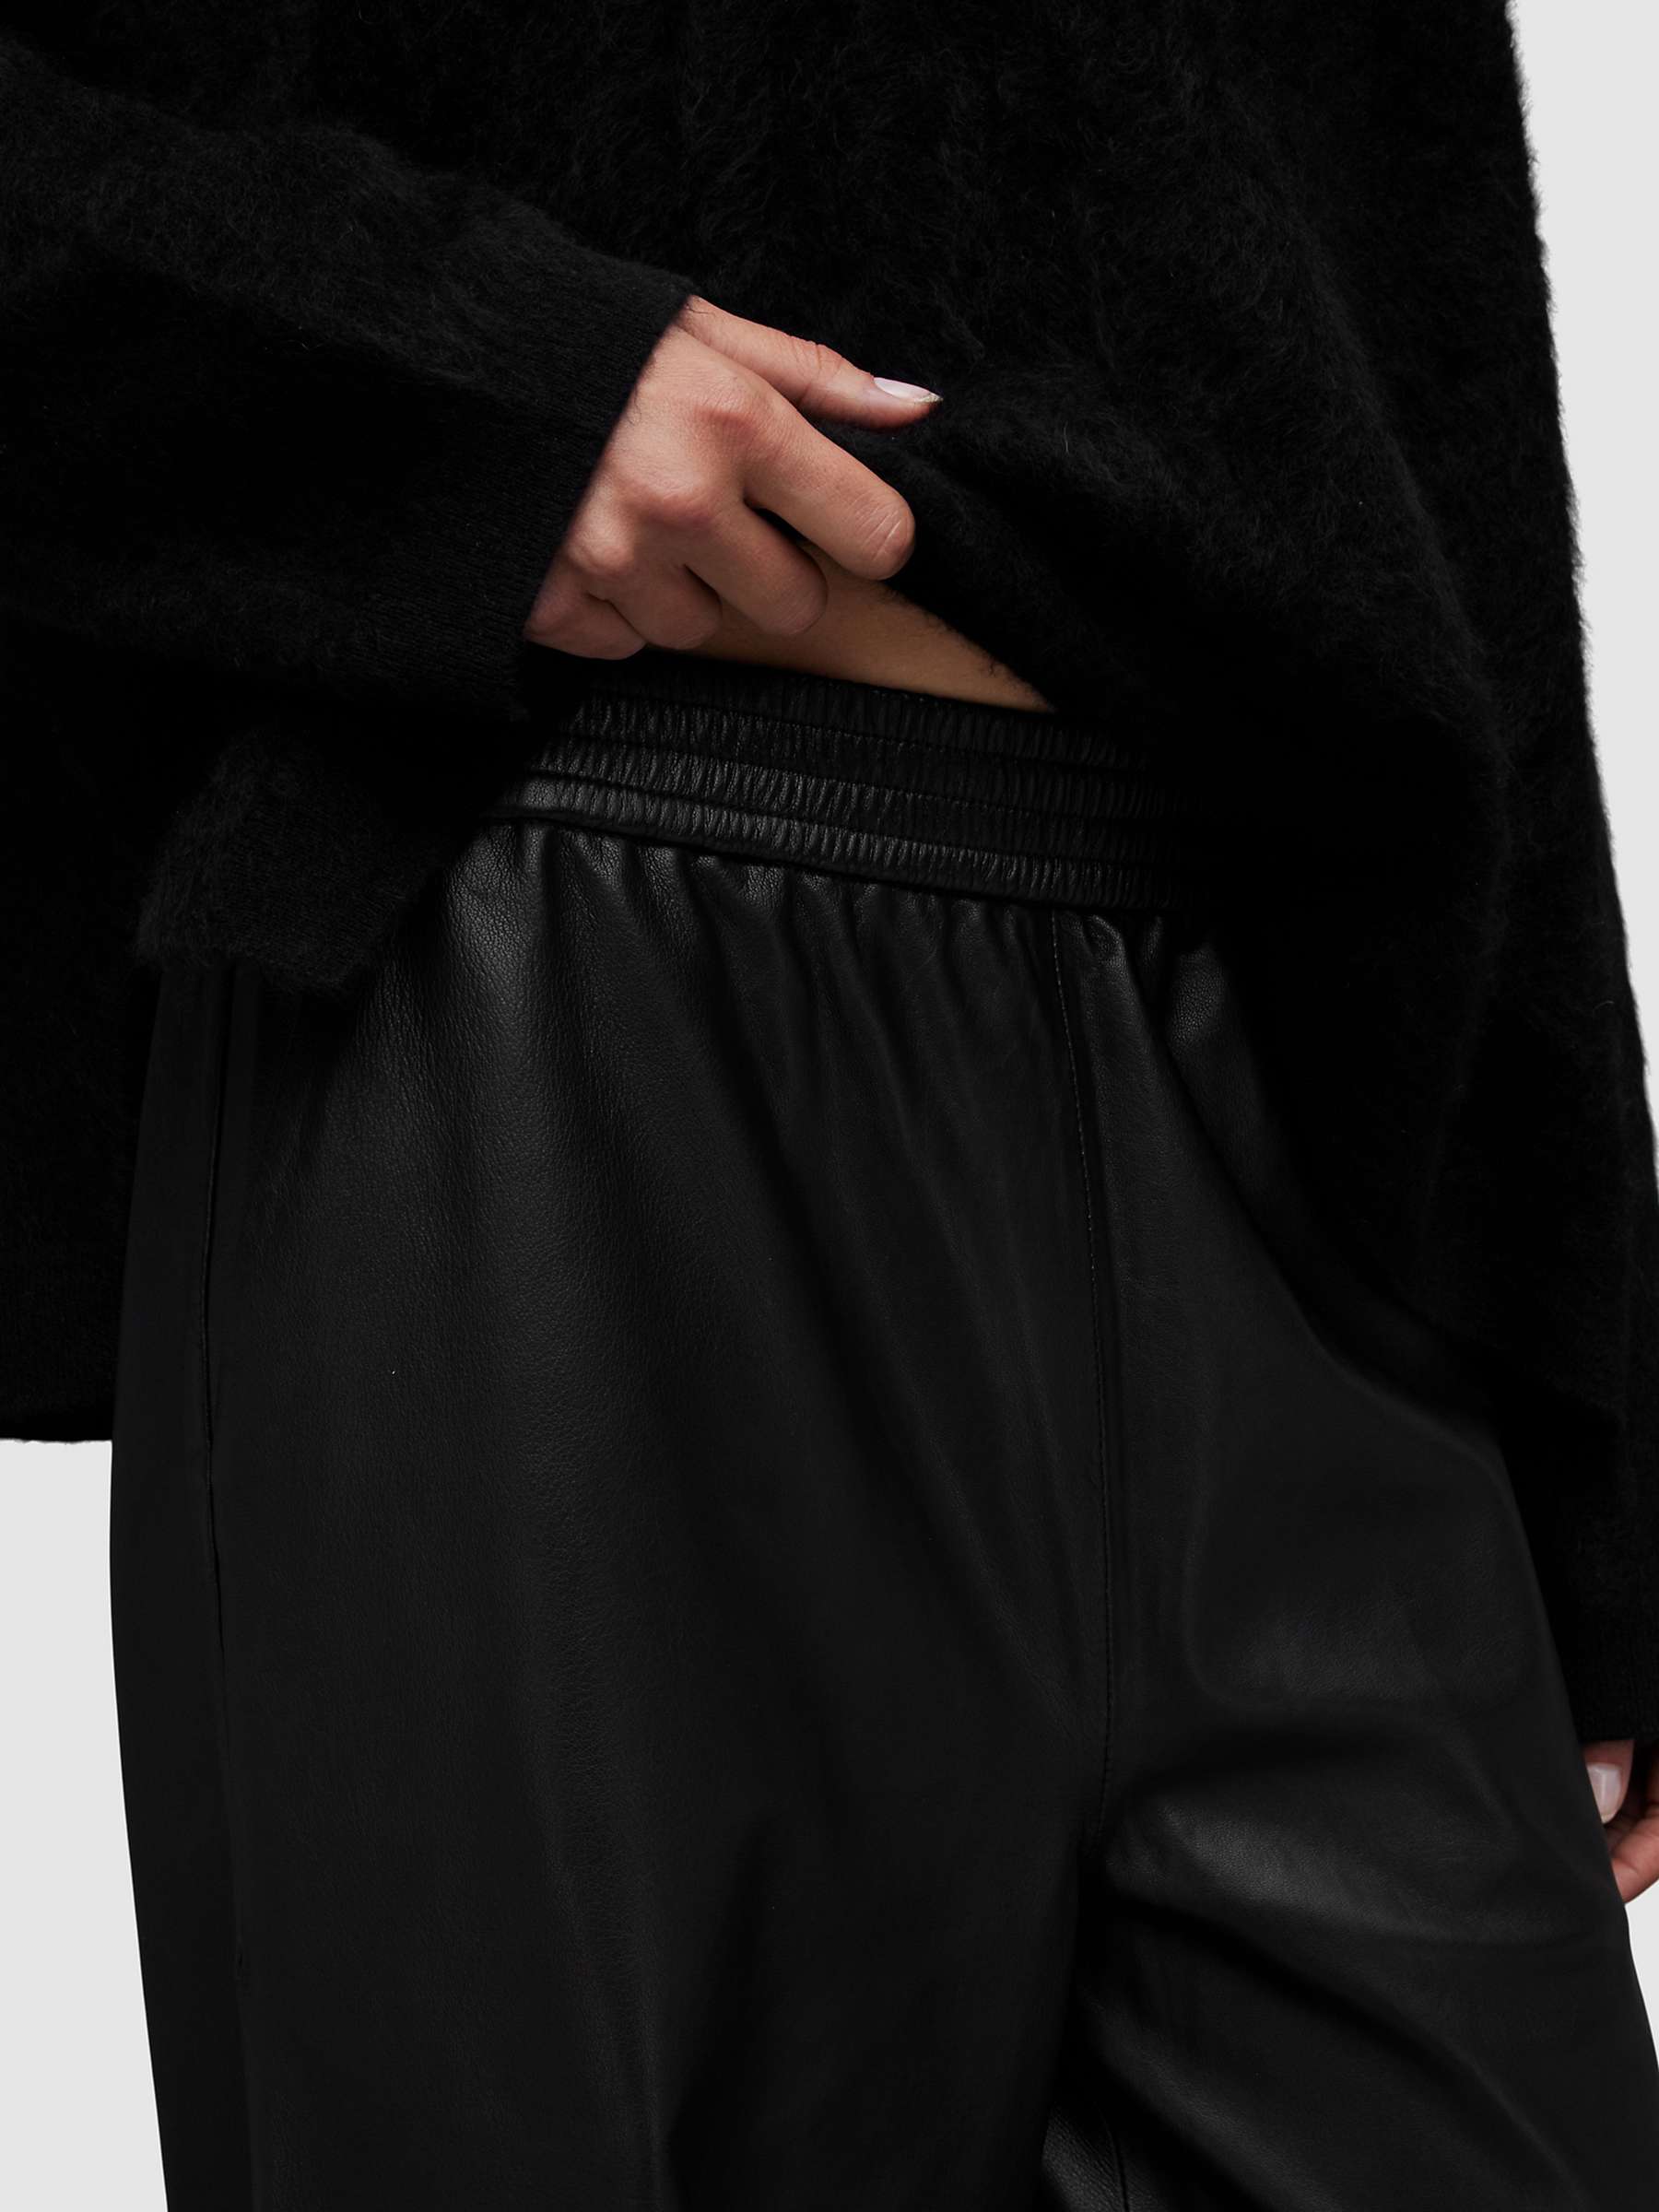 Buy AllSaints Aspen Leather Trousers, Black Online at johnlewis.com